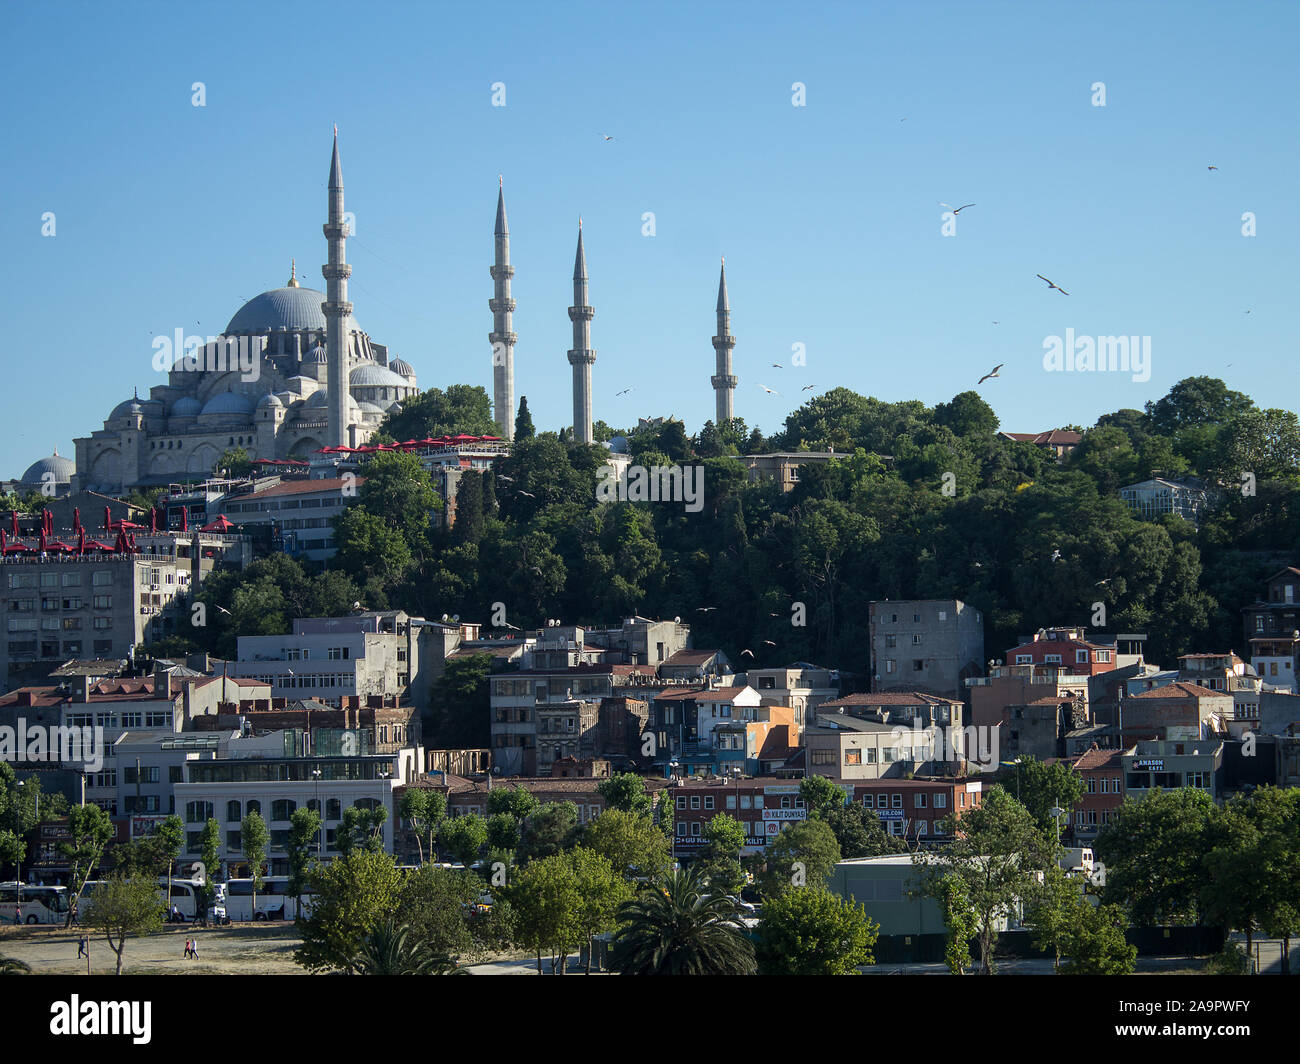 Suleymaniye, Istanbul, Turkey June 27th, 2019: Historical Suleymaniye Mosque and much deteriorated Suleymaniye District on a sunny day. Stock Photo